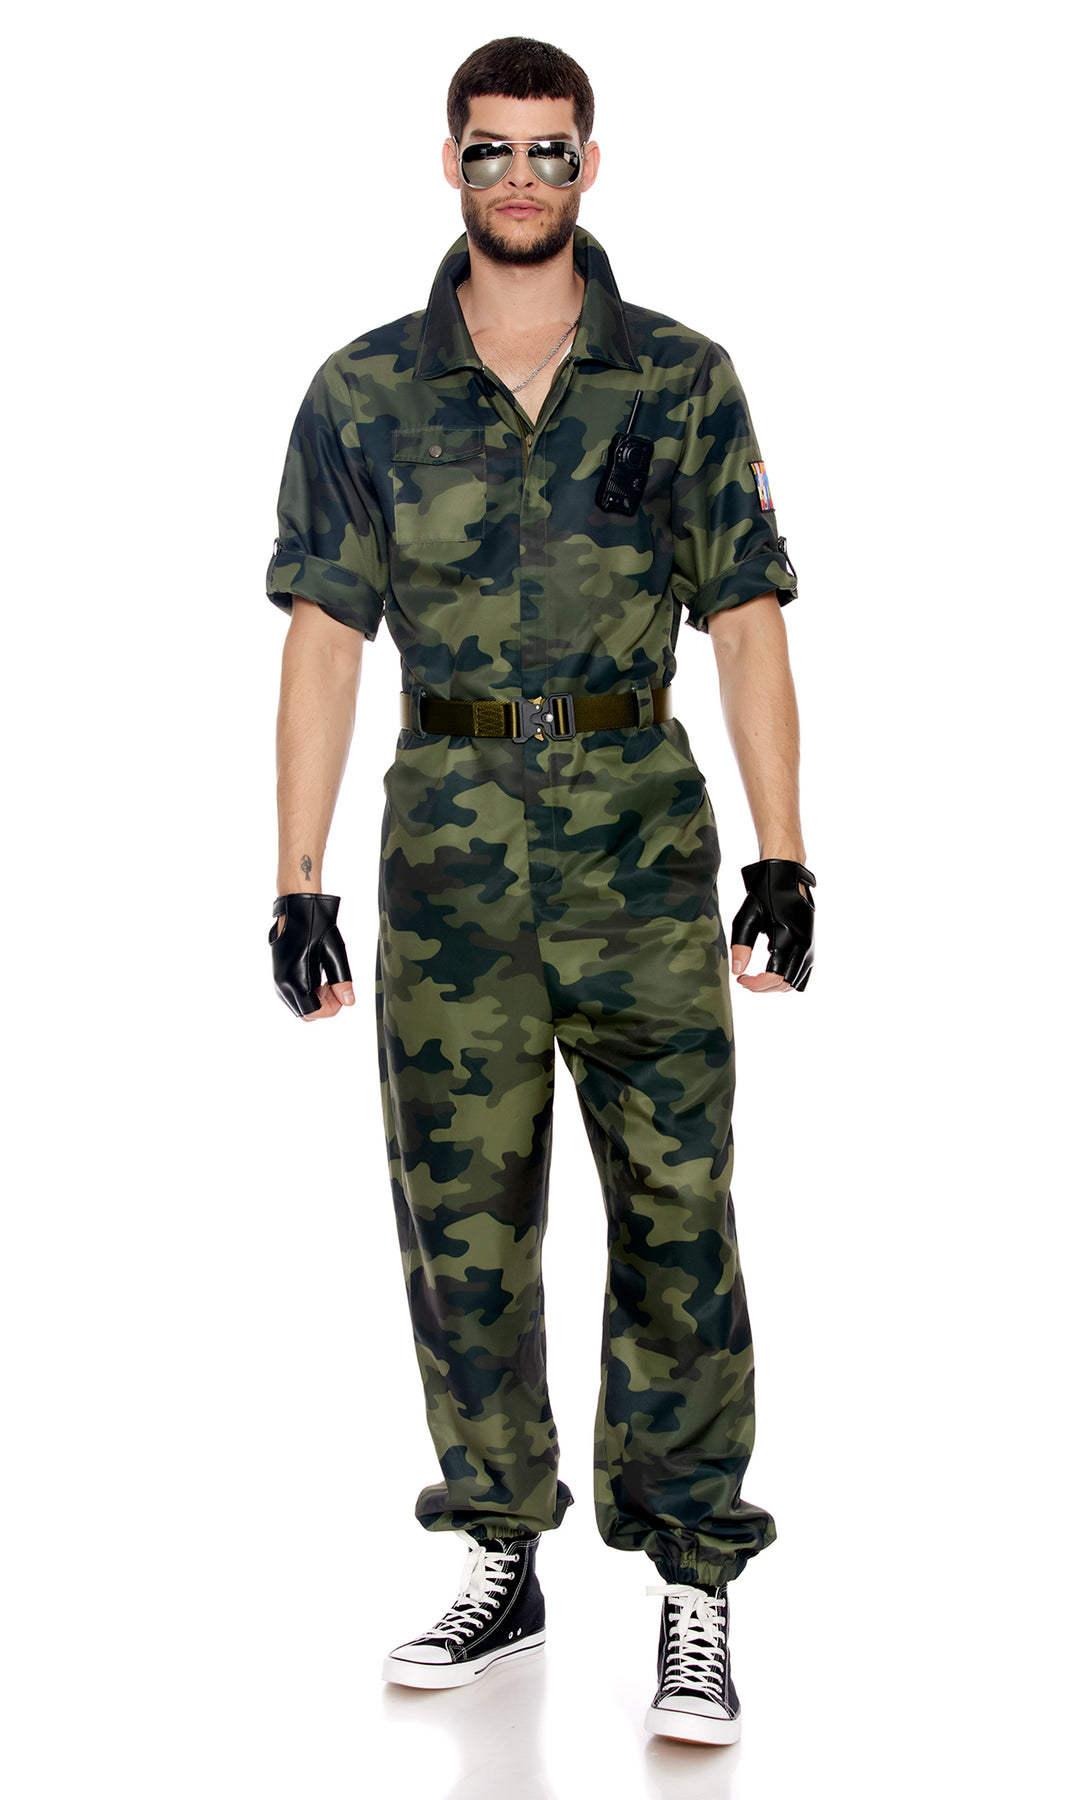 Combat Ready Men's Soldier Costume